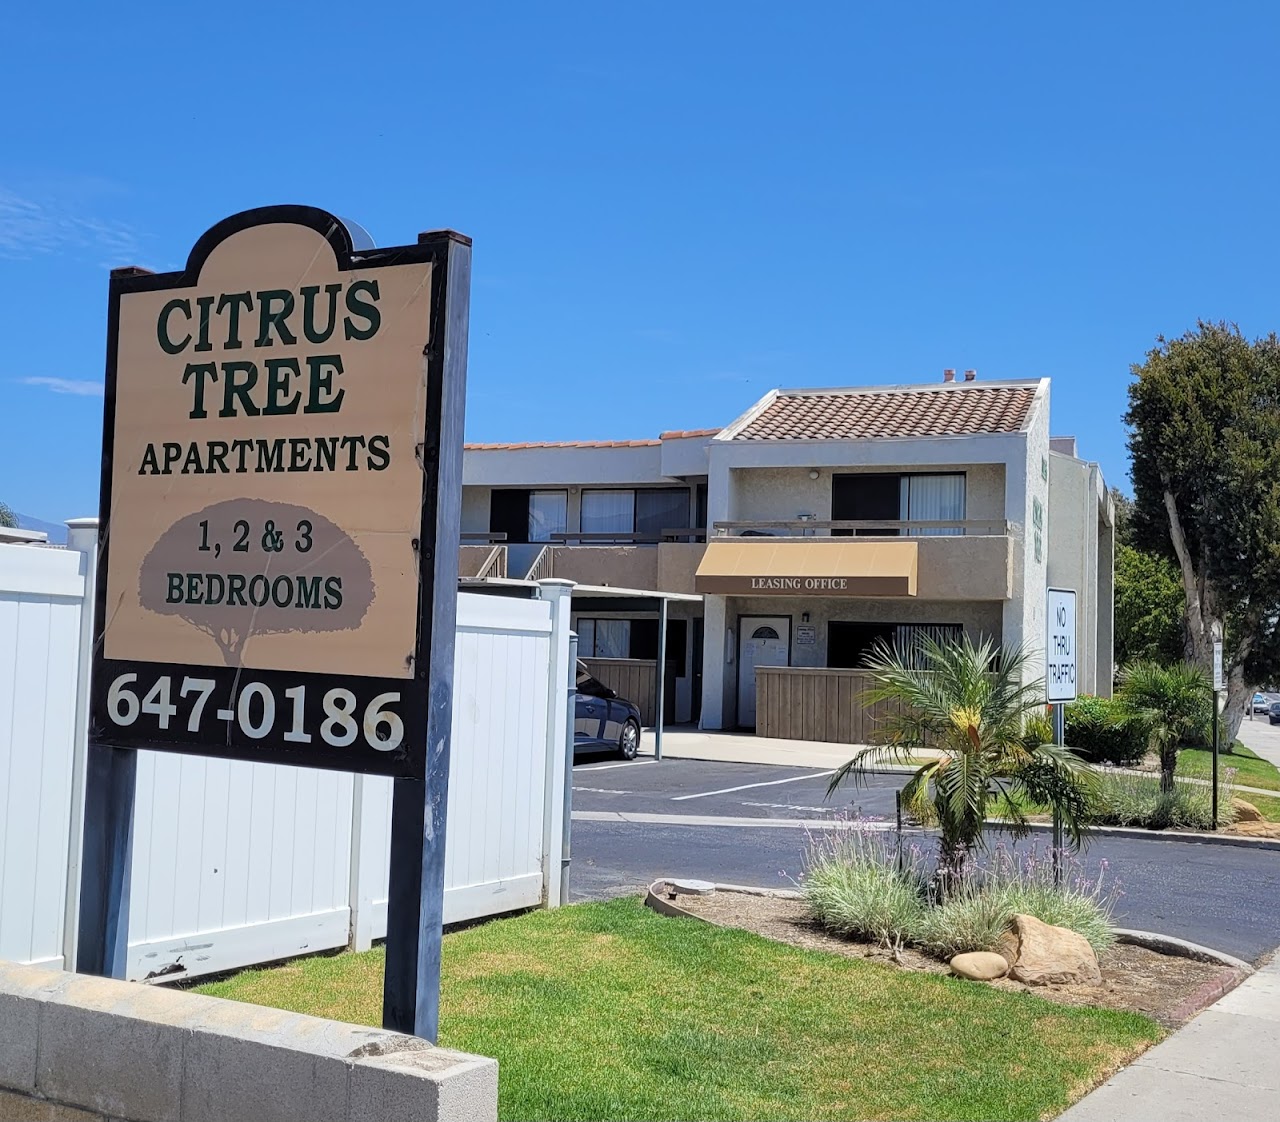 Photo of CITRUS TREE APTS. Affordable housing located at 11155 CITRUS DR VENTURA, CA 93004